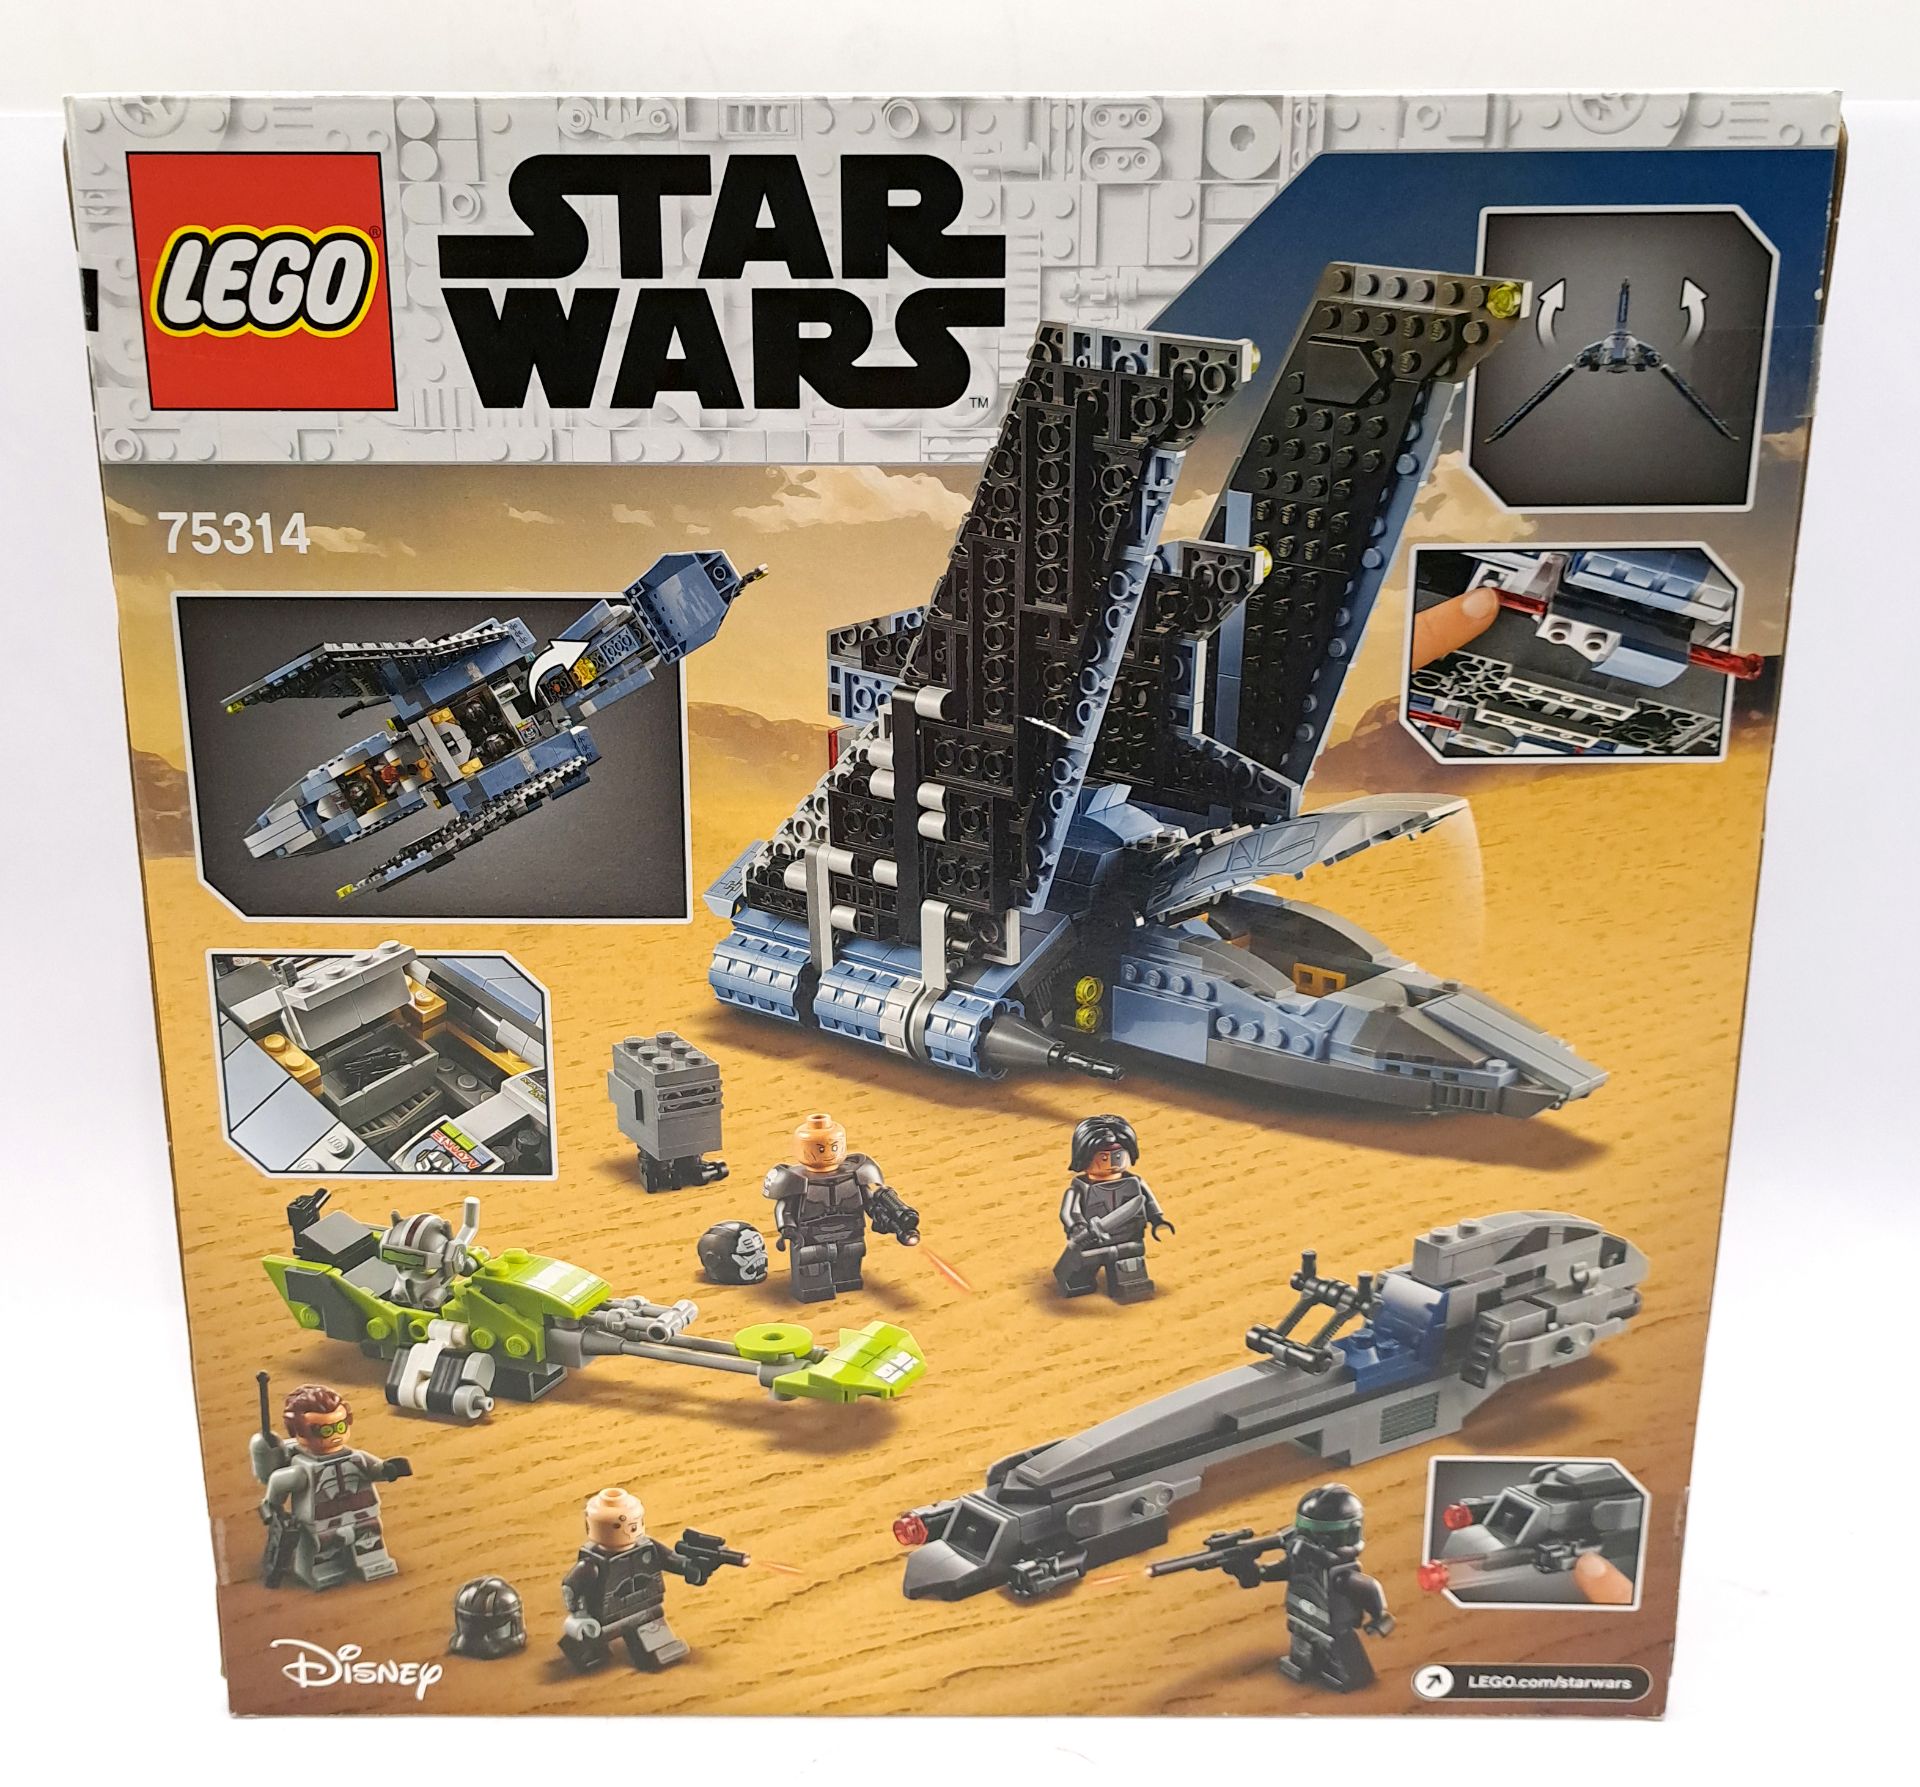 Lego Star Wars The Bad Batch Attacj Shuttle #75314 - Image 2 of 2